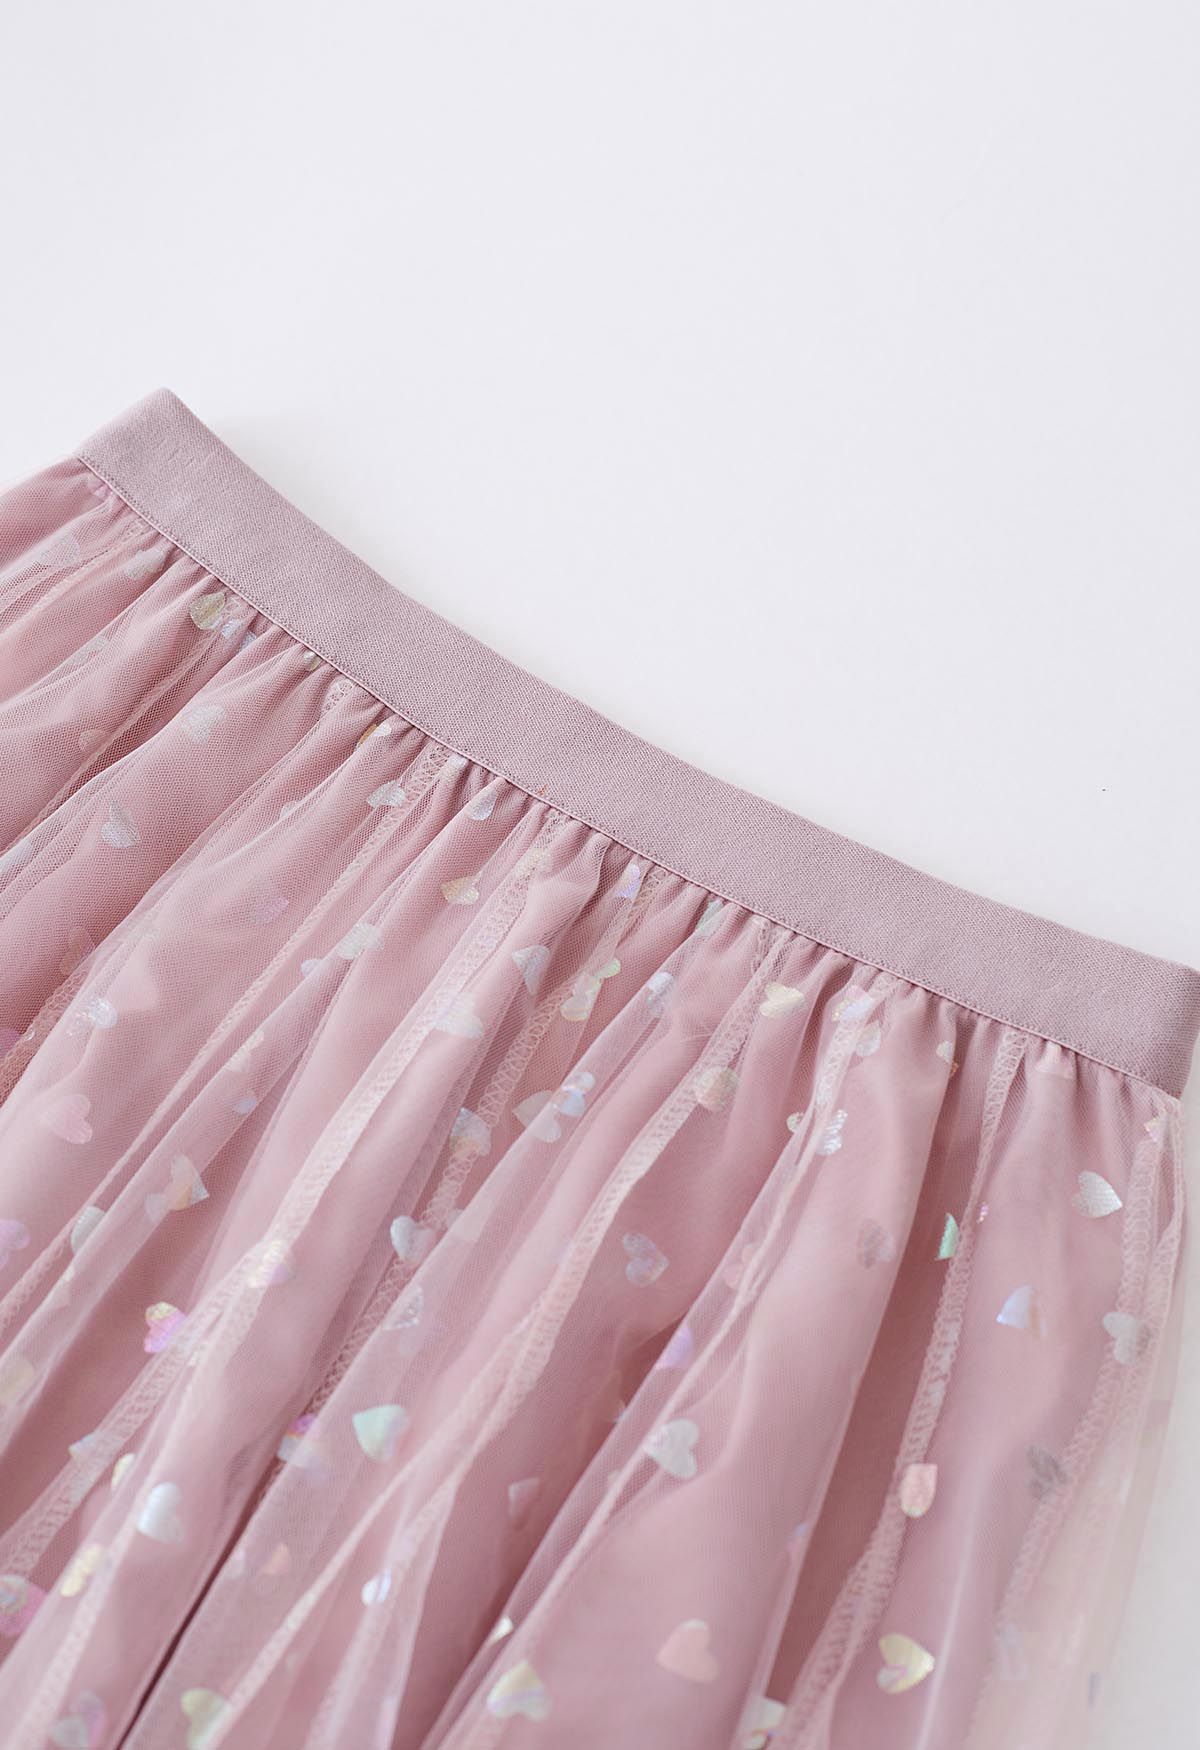 Iridescent Hearts Mesh Tulle Midi Skirt in Pink